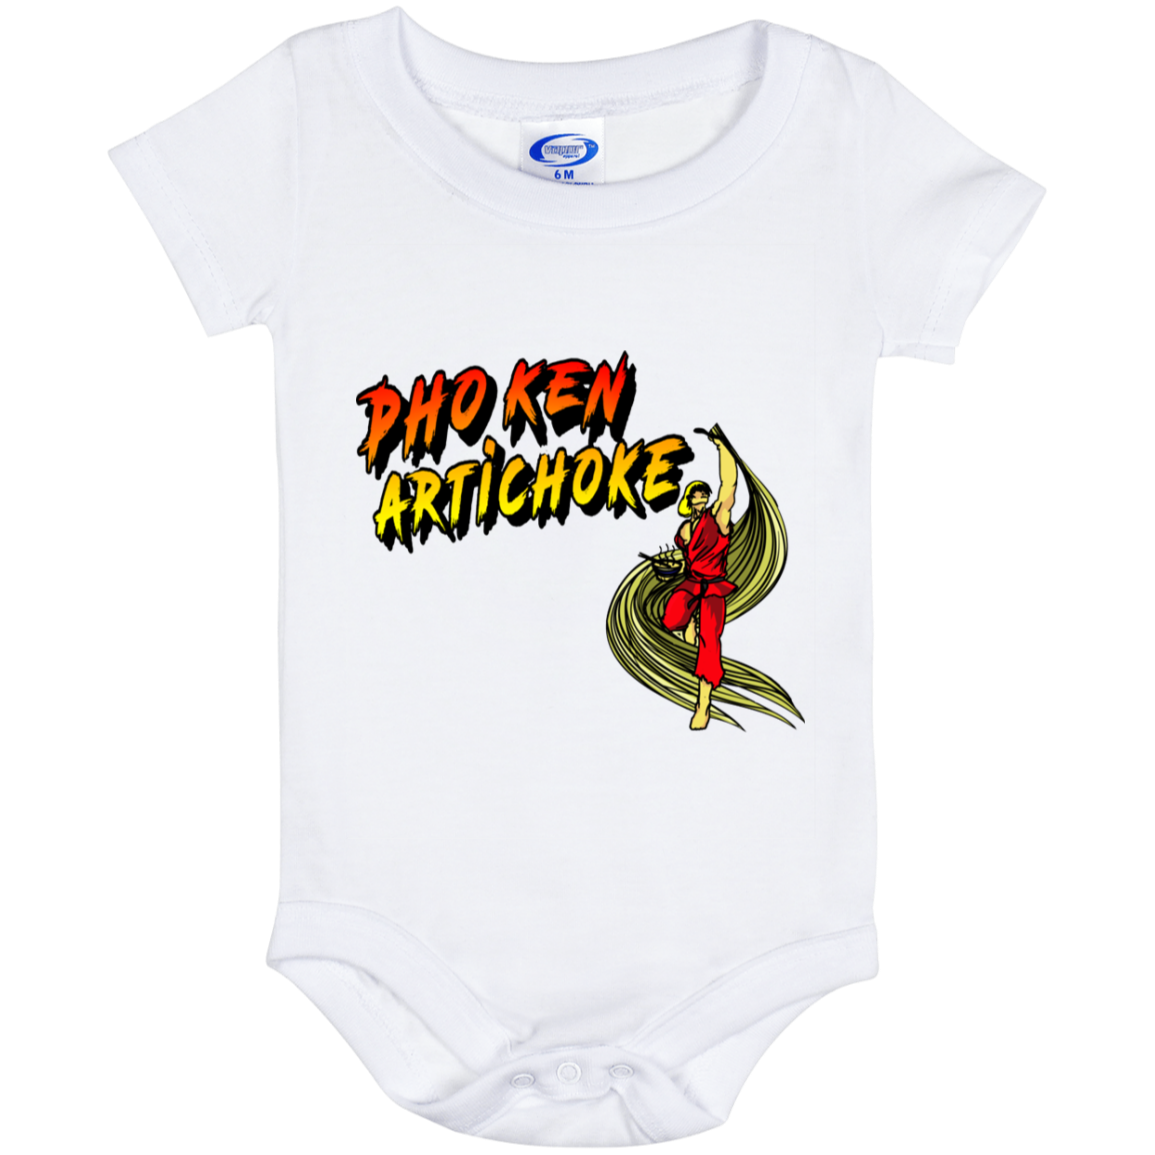 ArtichokeUSA Custom Design. Pho Ken Artichoke. Street Fighter Parody. Gaming. Baby Onesie 6 Month